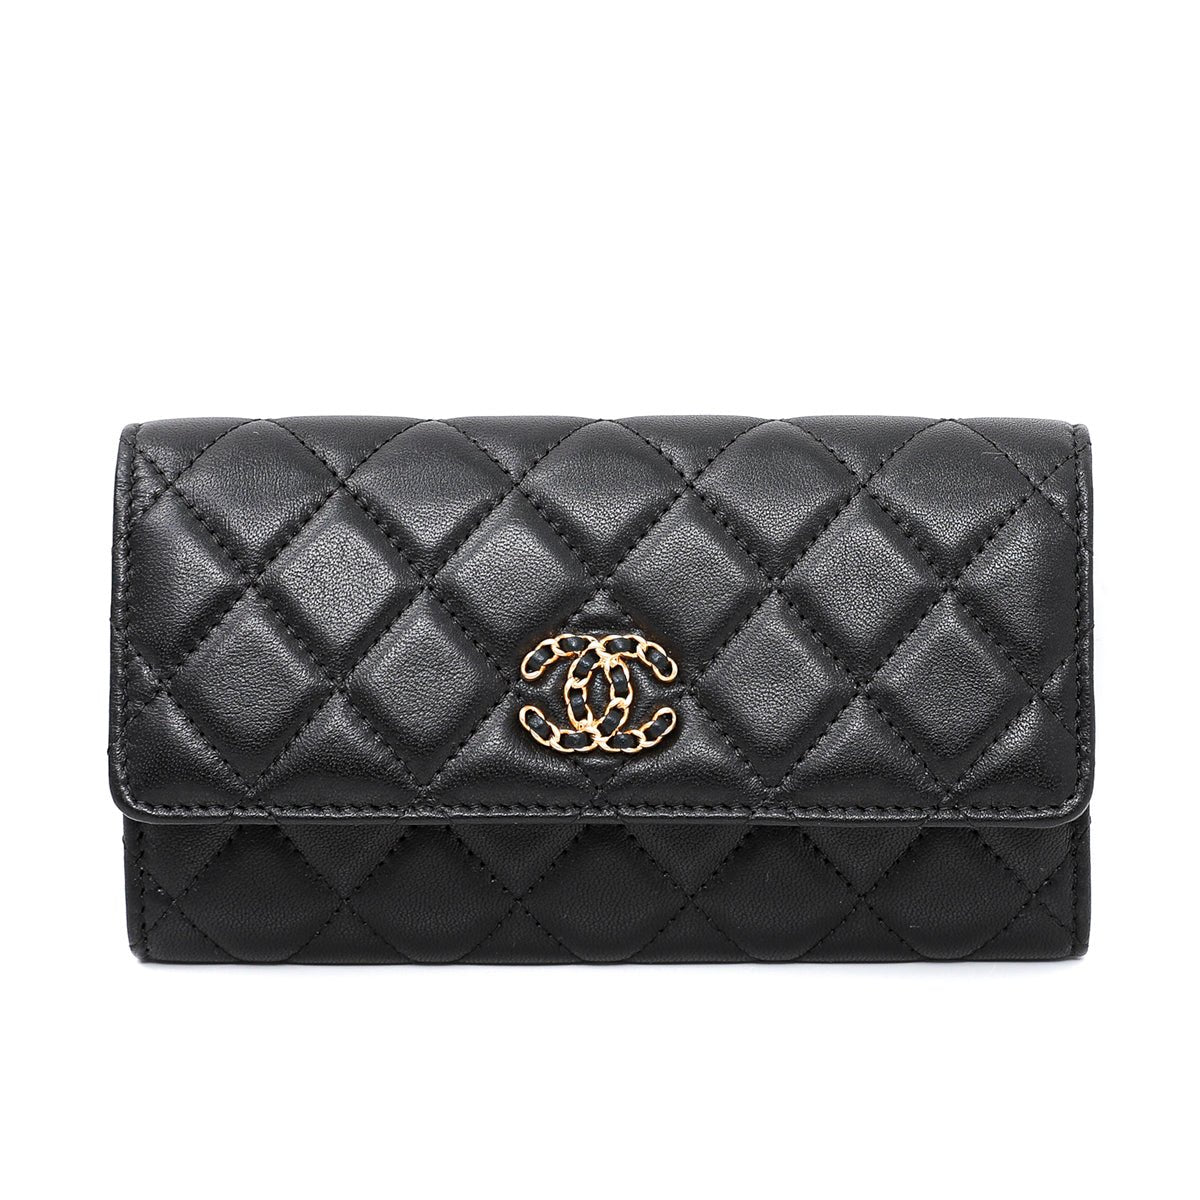 The Closet - Chanel Black CC 19 Flap Wallet | The Closet